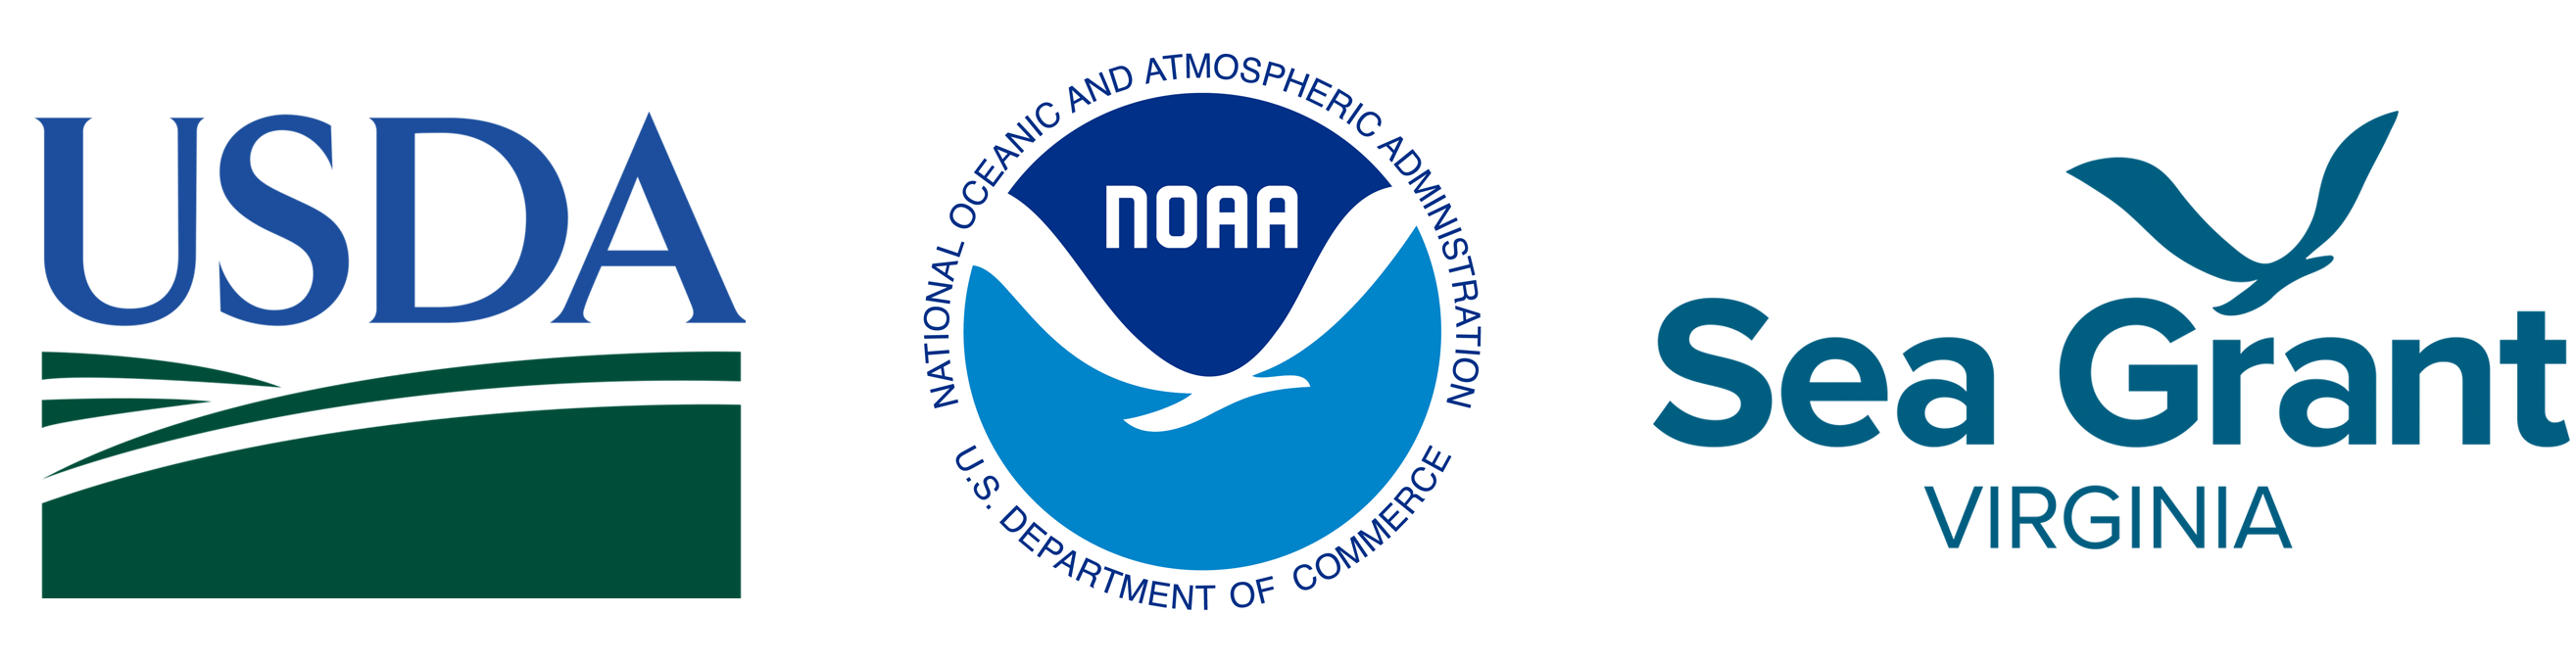 USDA, NOAA,and Sea Grant Logos